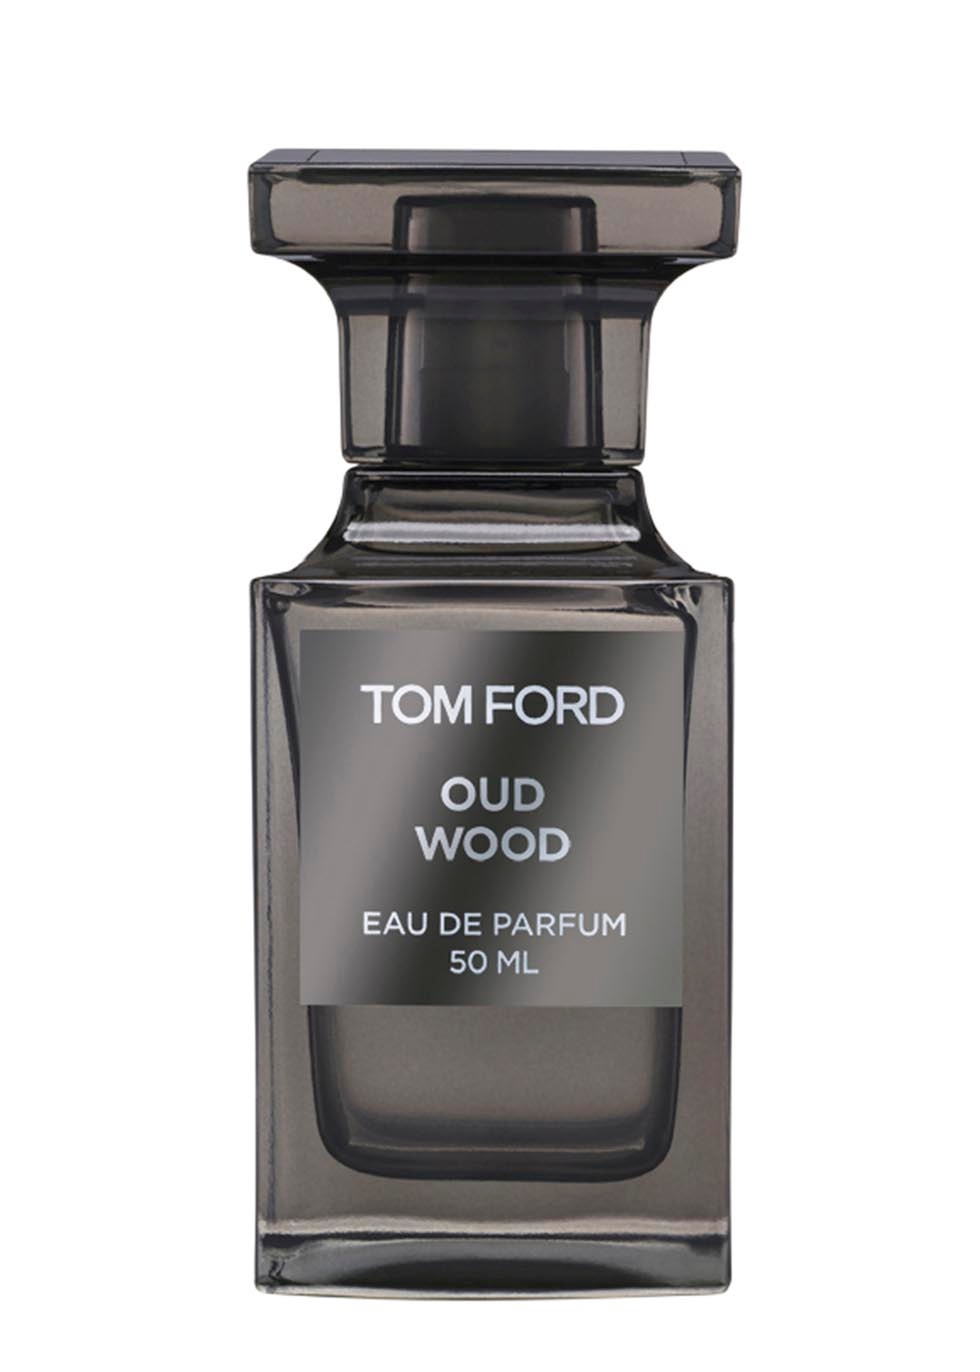 Tom Ford Oud Wood Eau De Parfum 50ml - Harvey Nichols